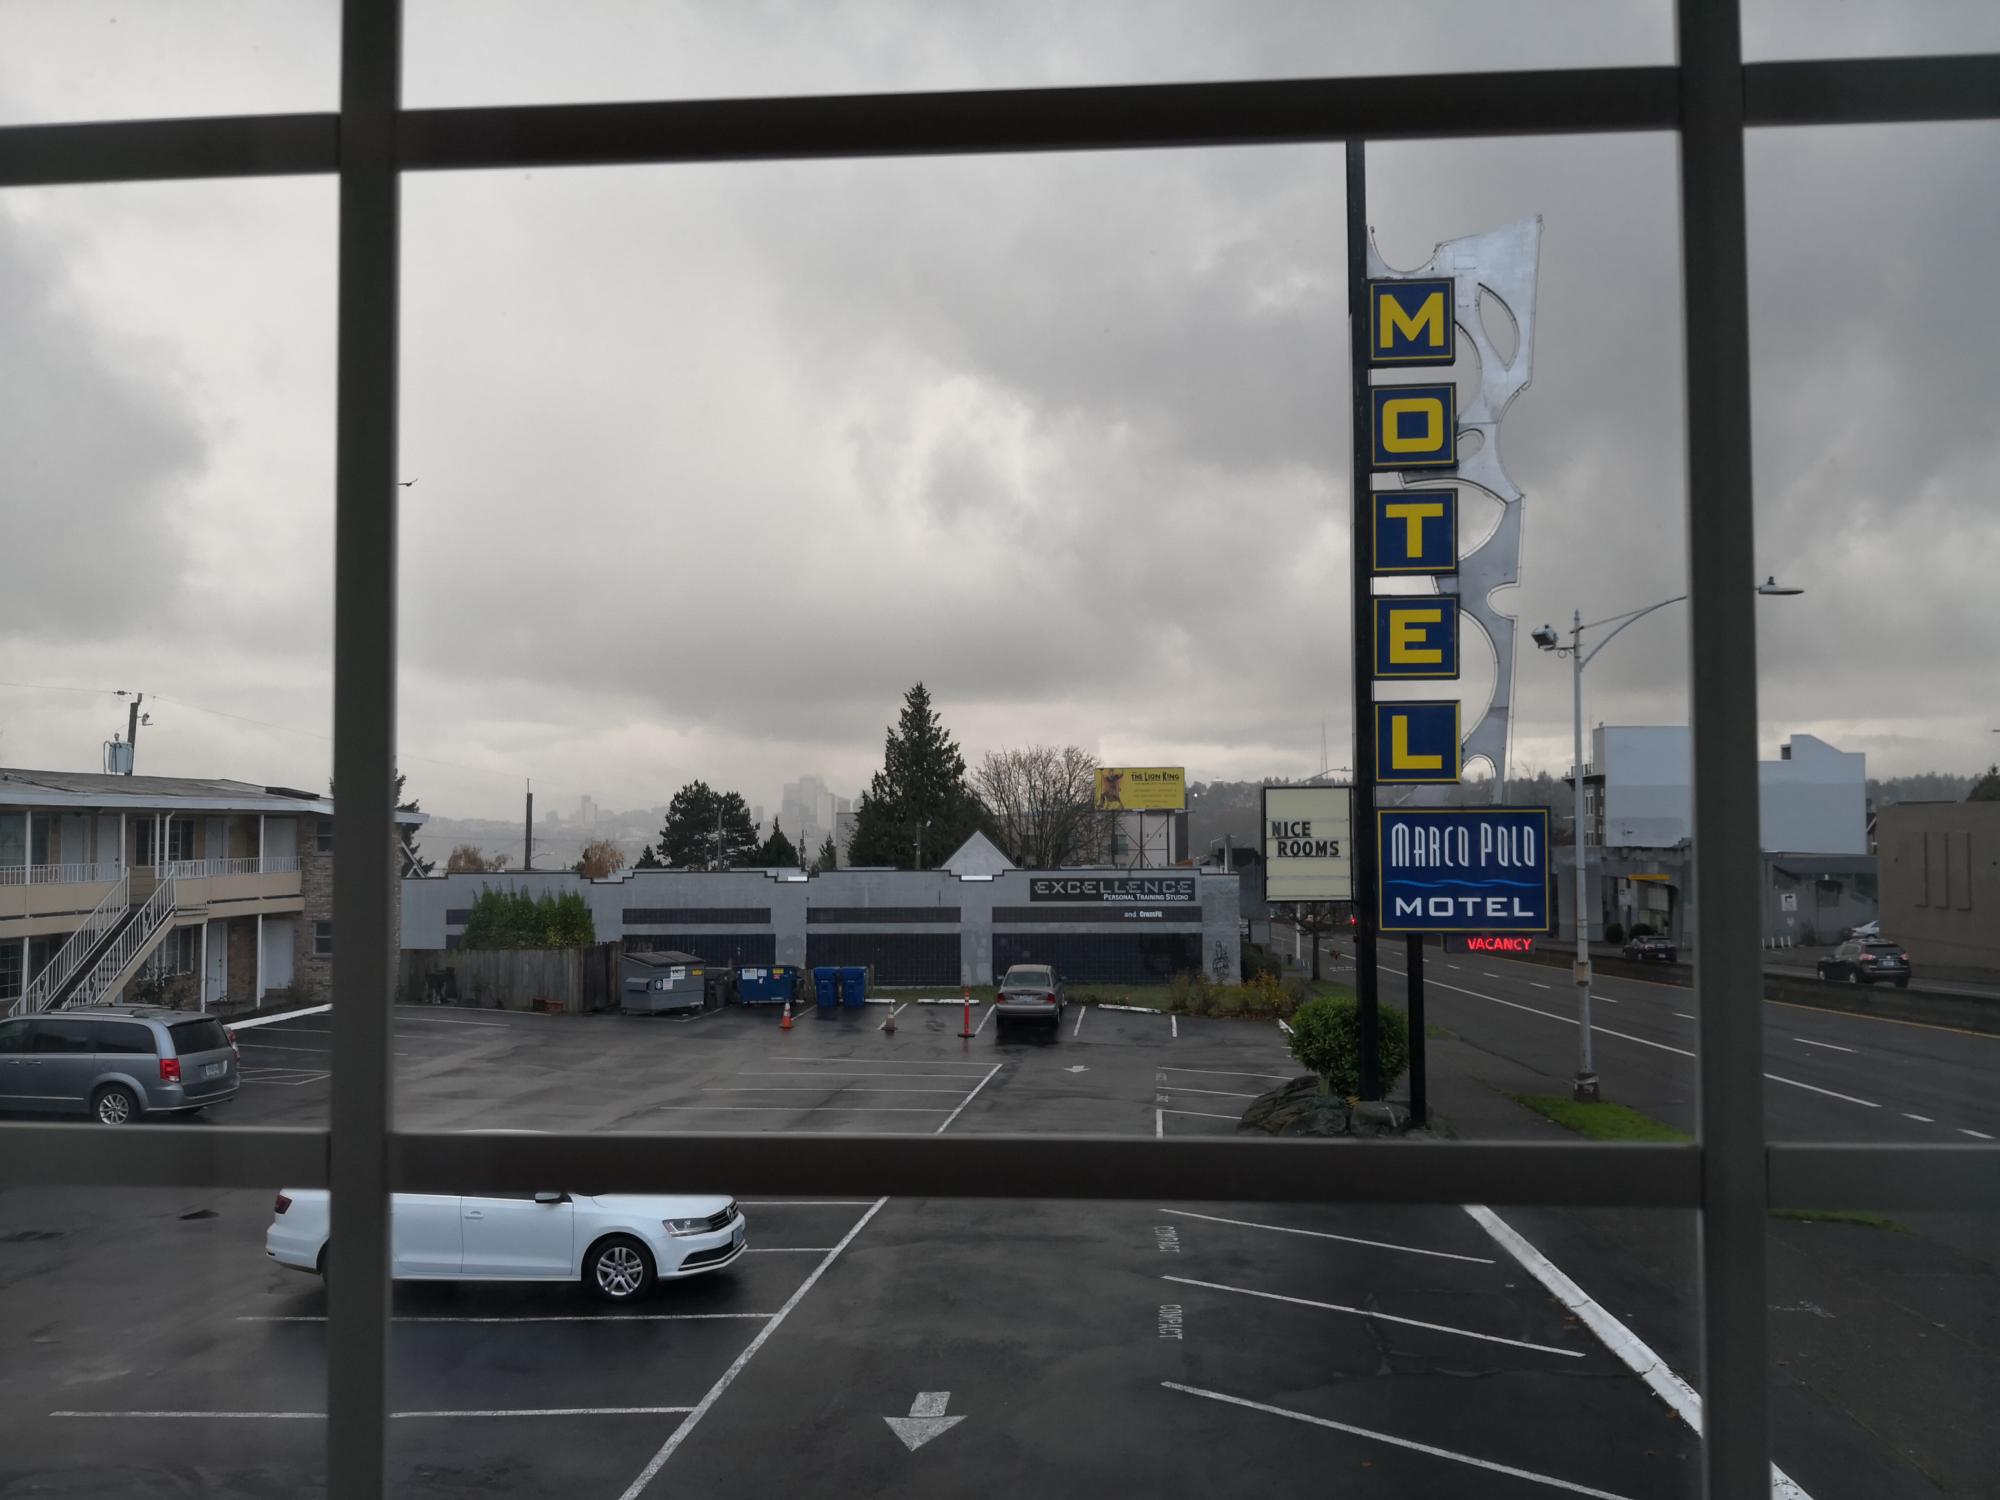 Seattle (2010-2019) - Marco Polo Motel